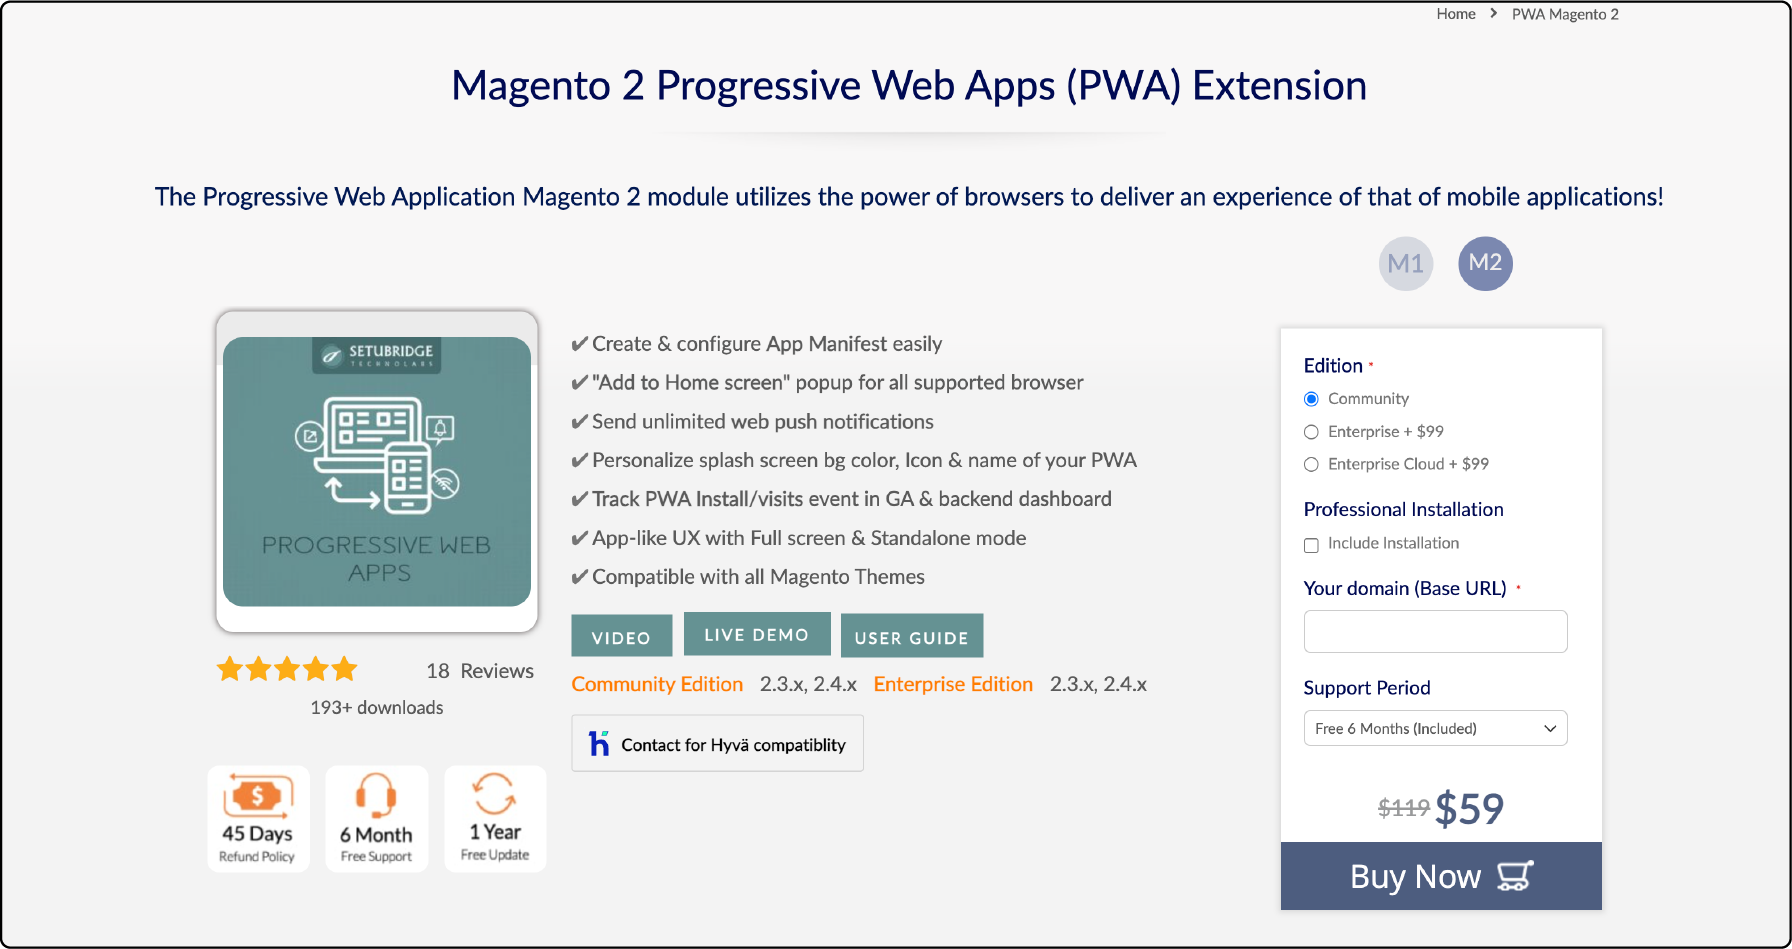 SetuBridge's Magento 2 PWA Extension emphasizing push notifications and offline mode